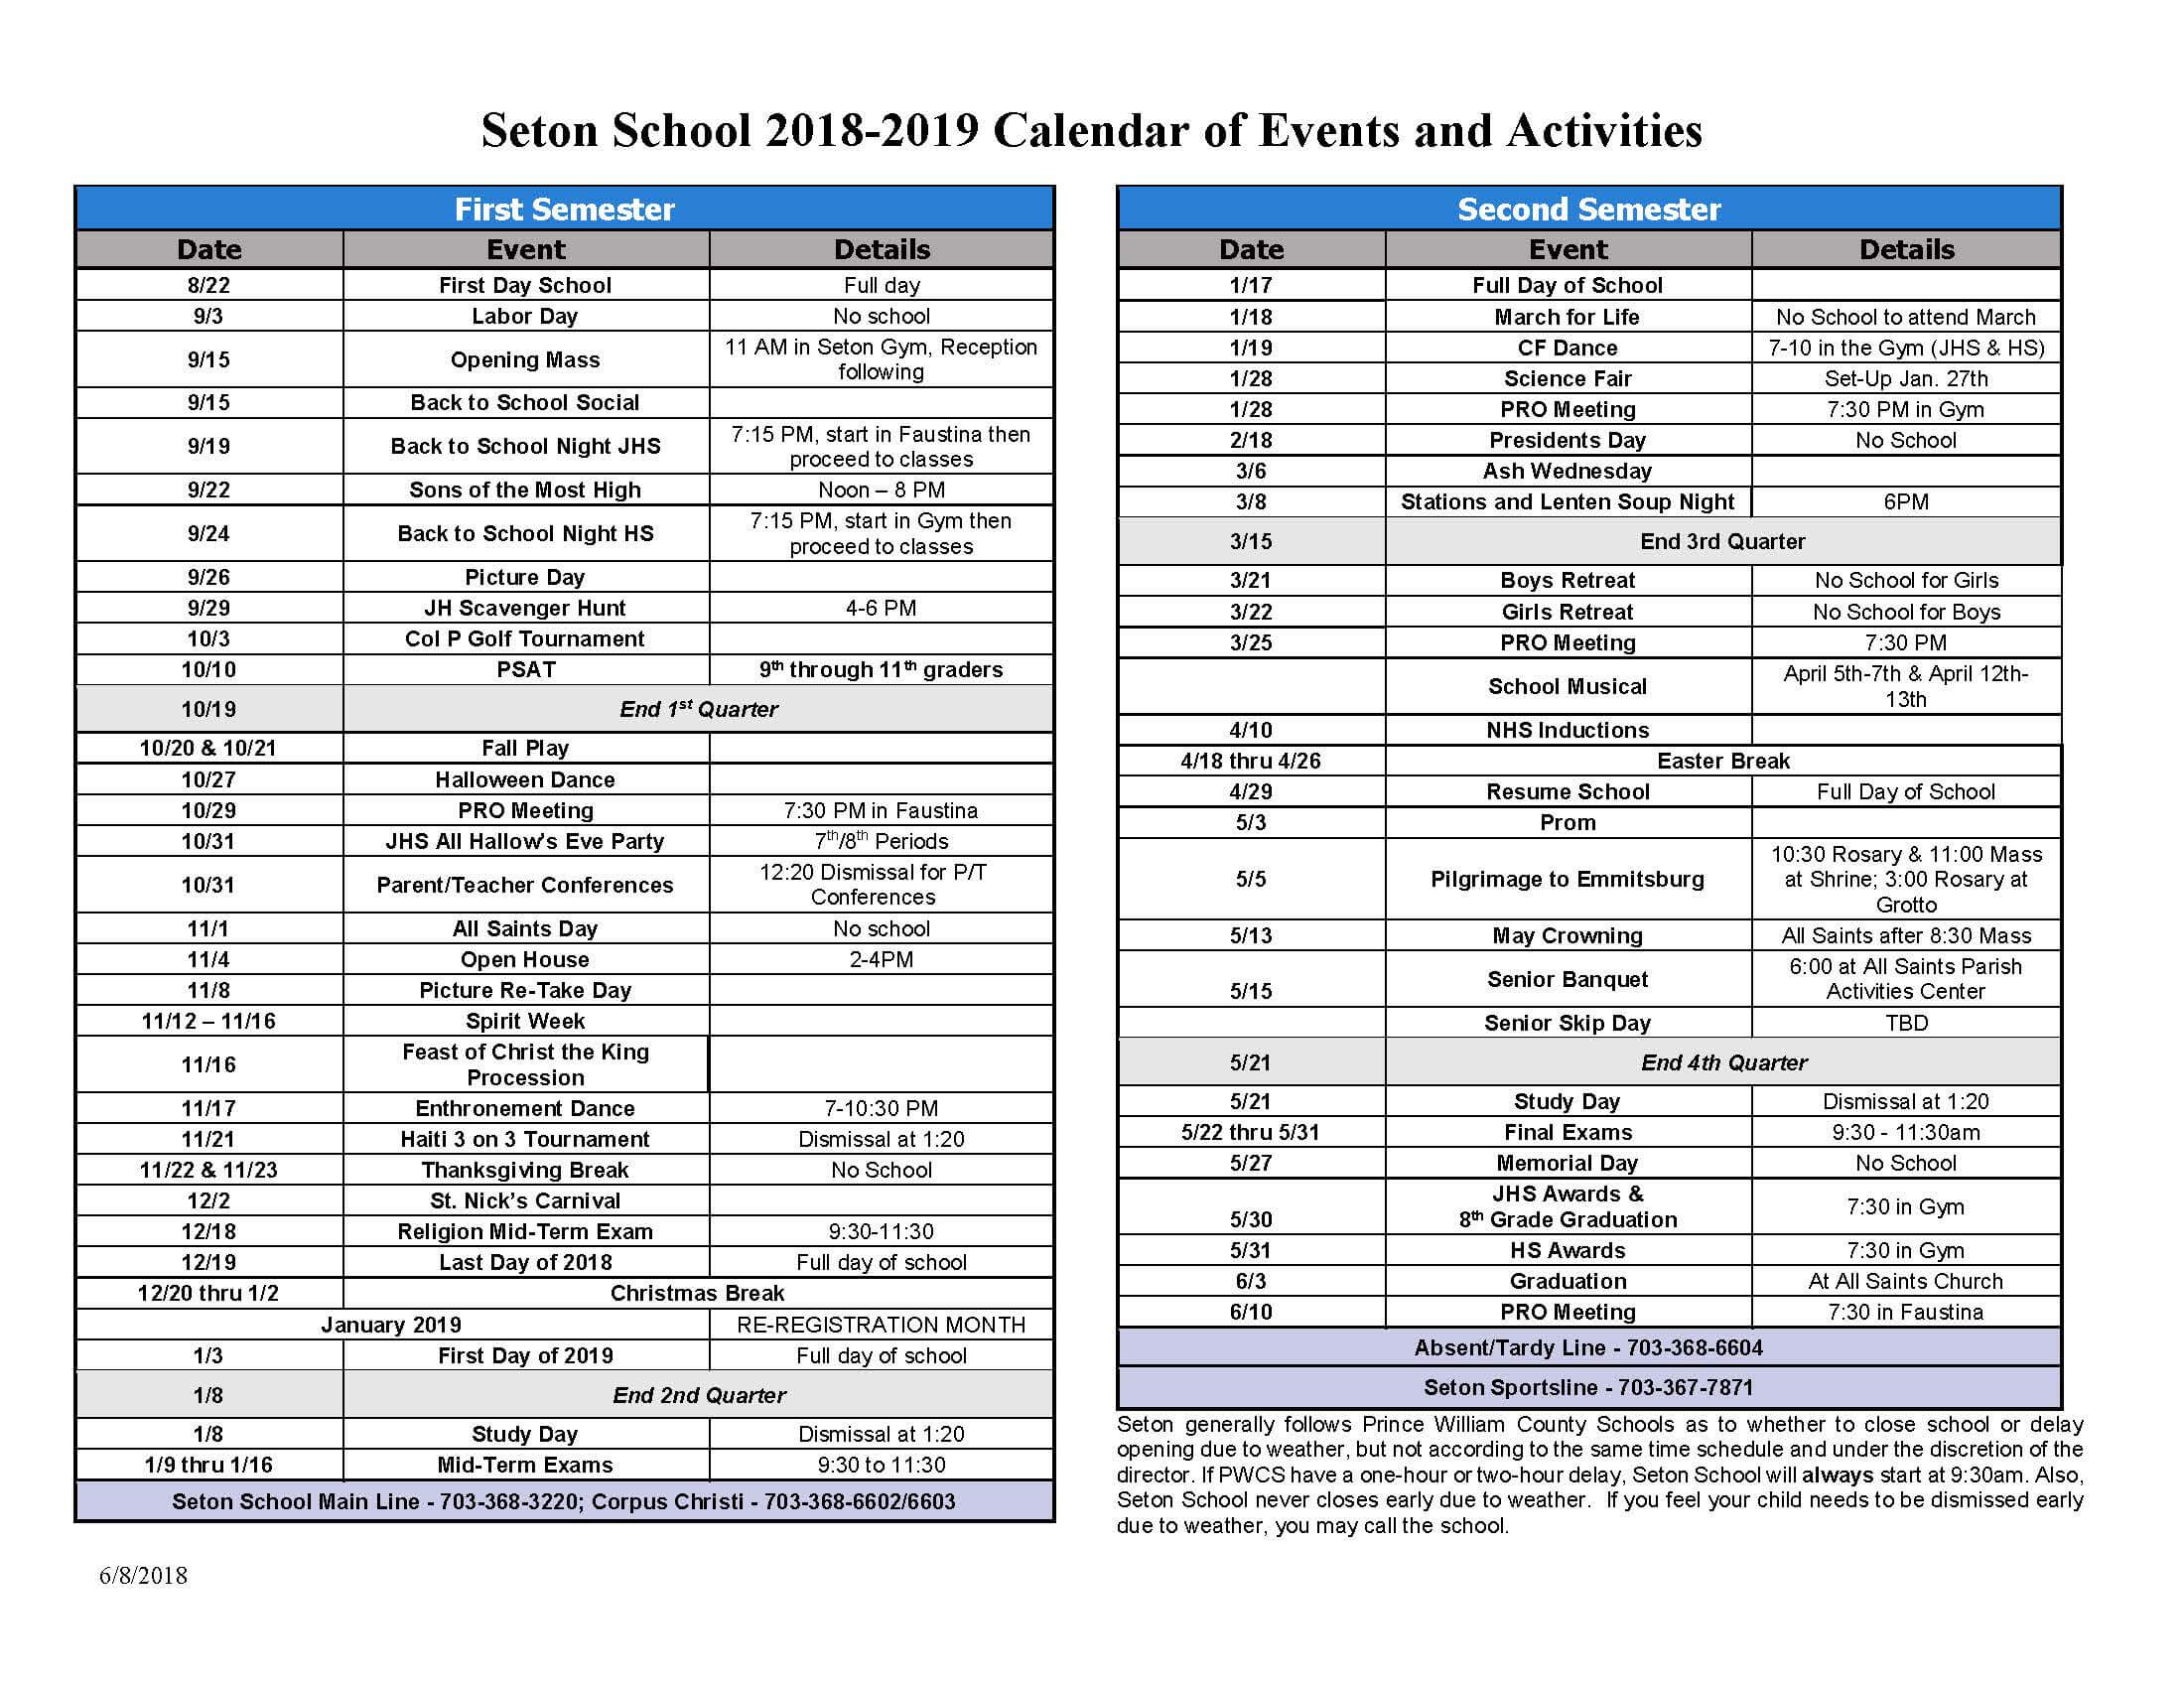 2018 2019 Seton School Calendar of Events and Activities Seton School